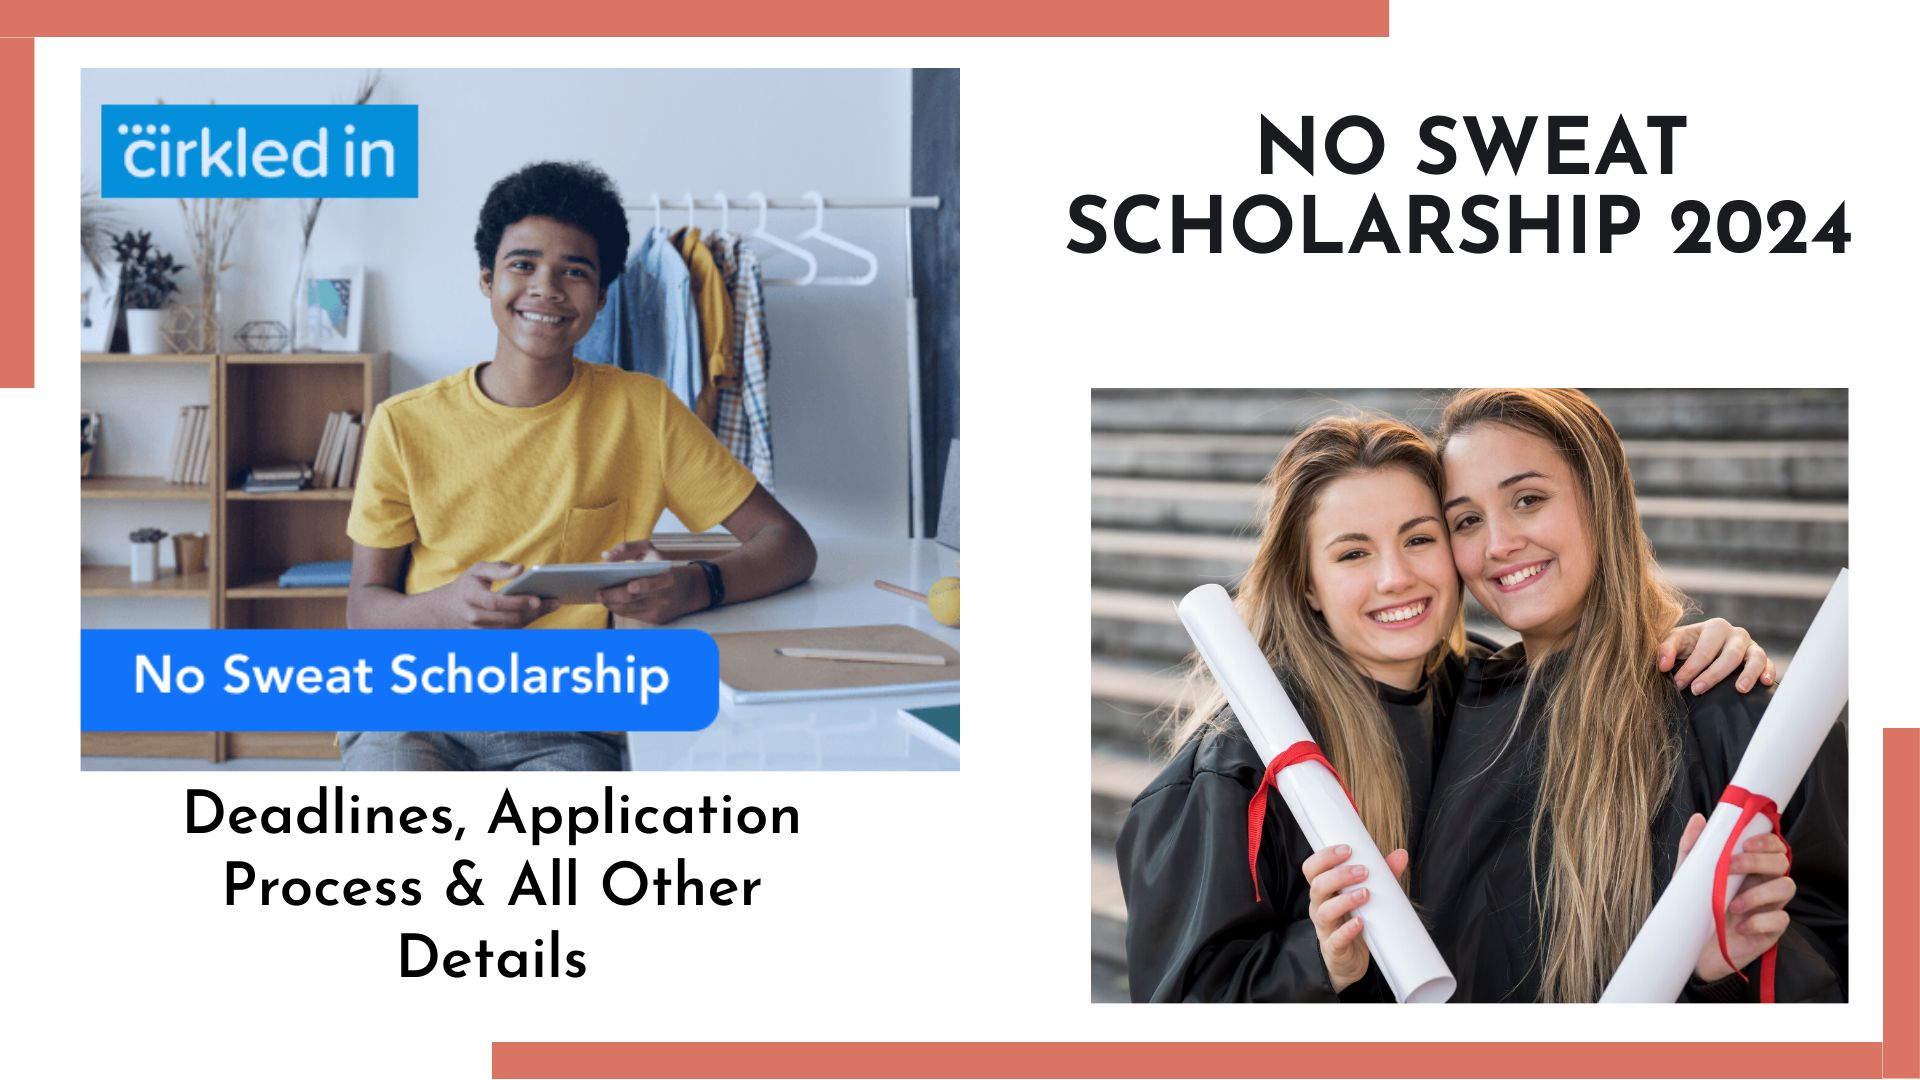 No Sweat Scholarship 2024 Application Process at Roosevelt High School